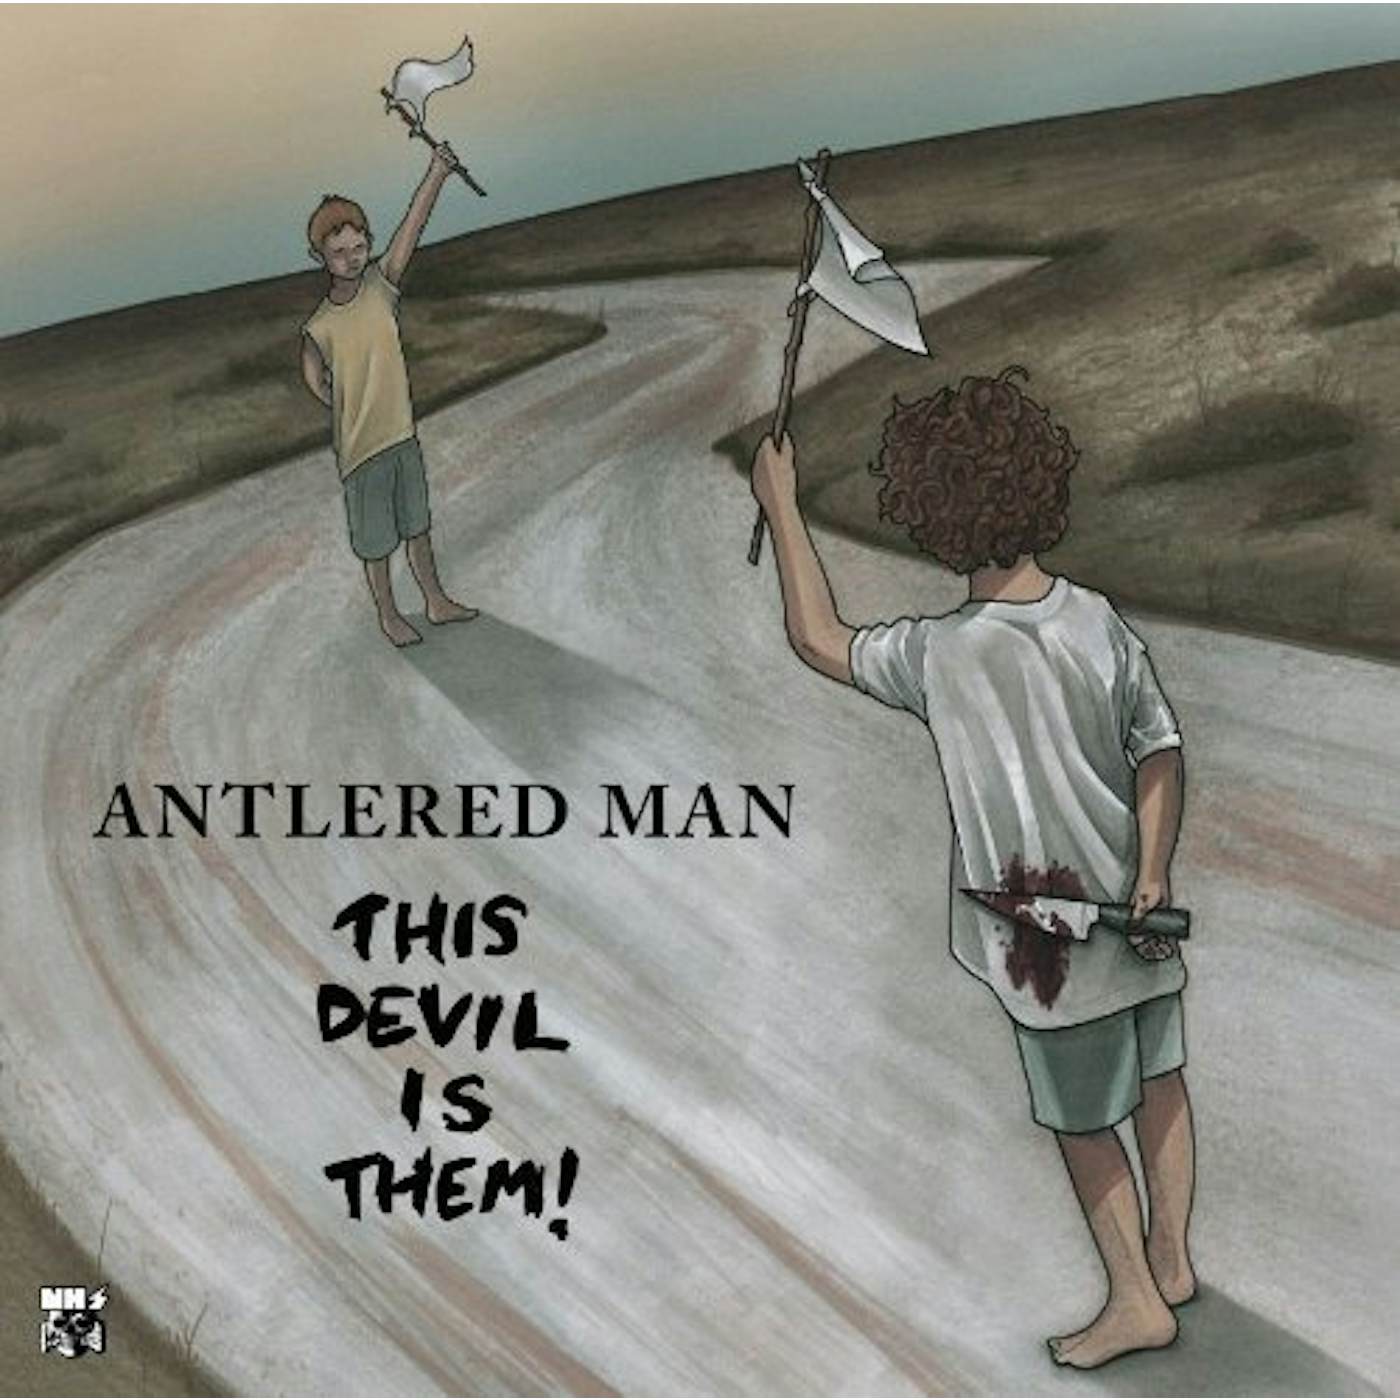 Antlered Man This Devil Is Them Vinyl Record